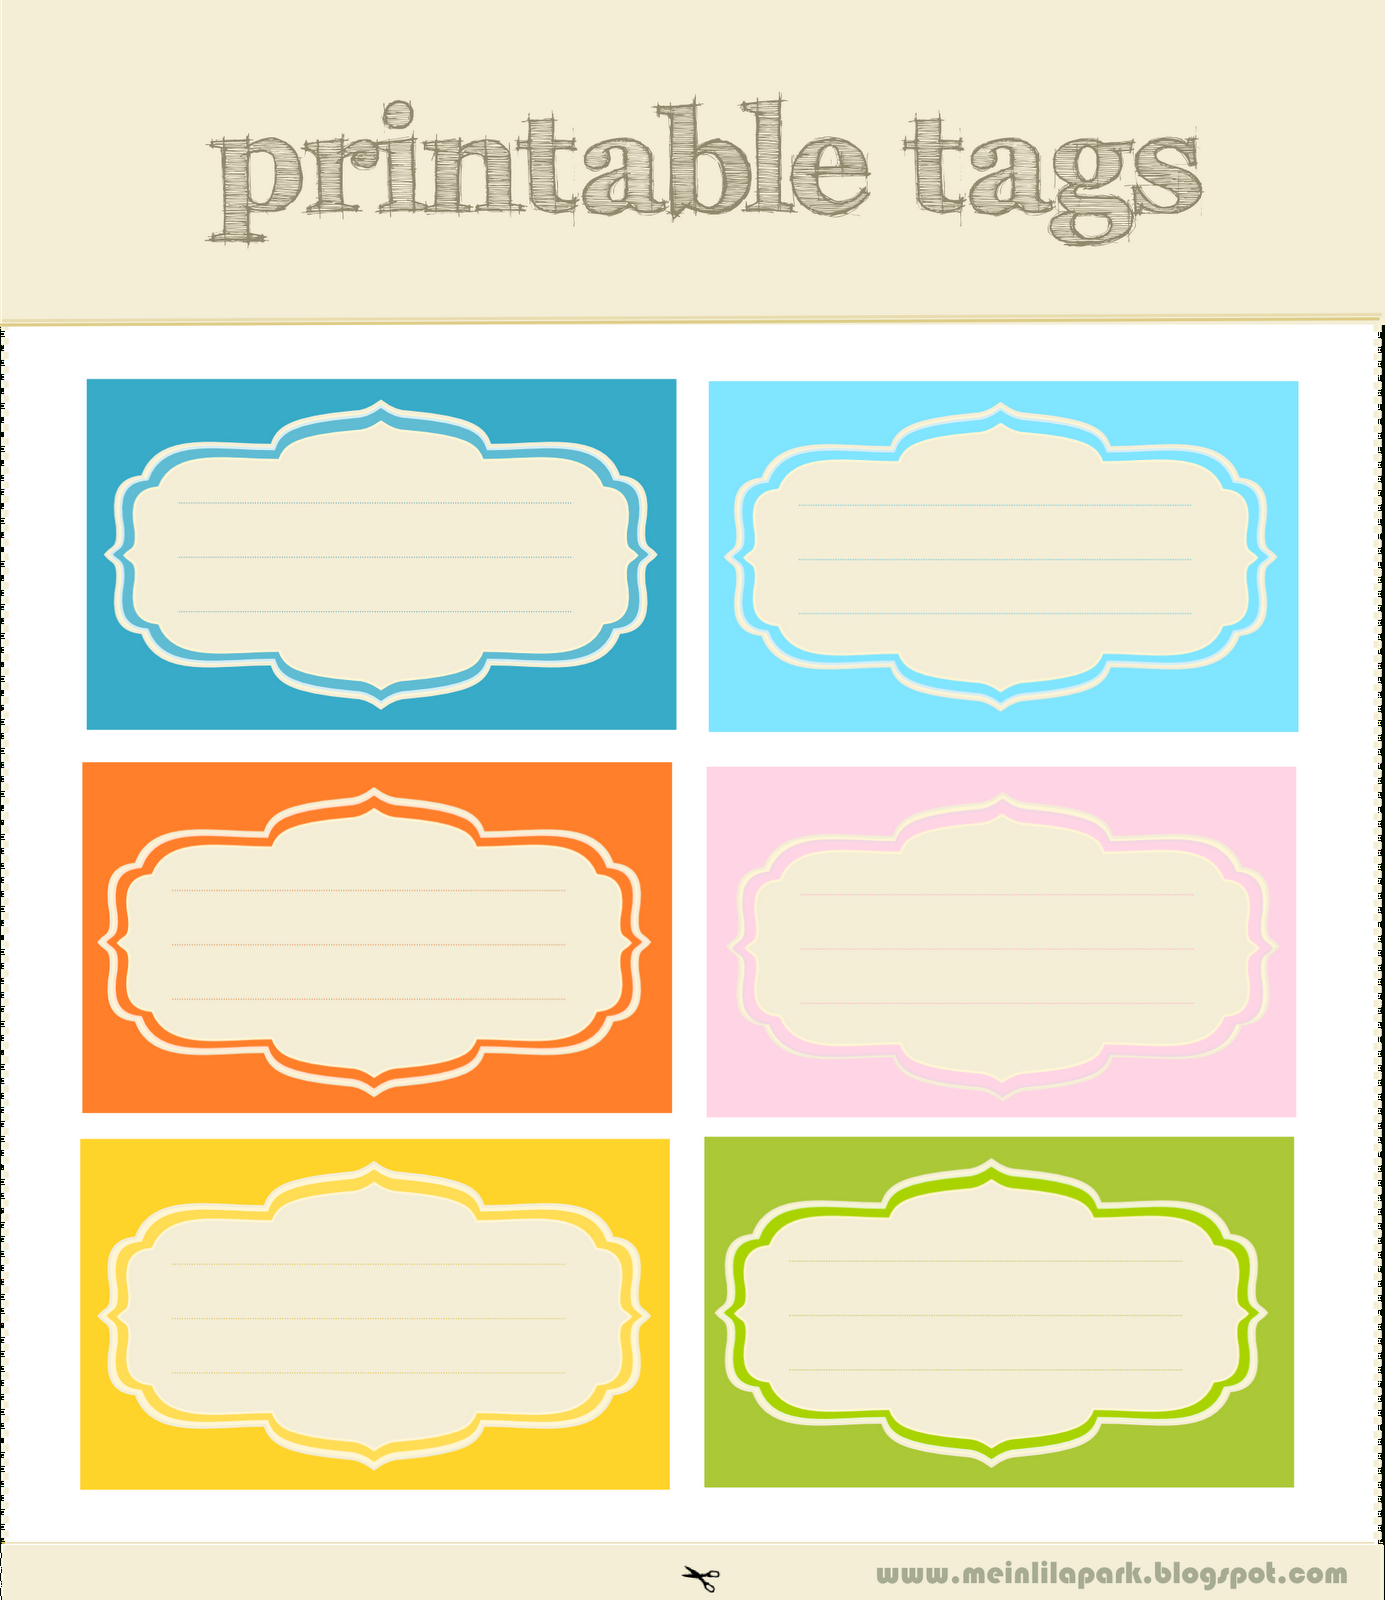 Free Printable Scrapbooking Tags And Digital Journaling Tags - Free Printable Tags